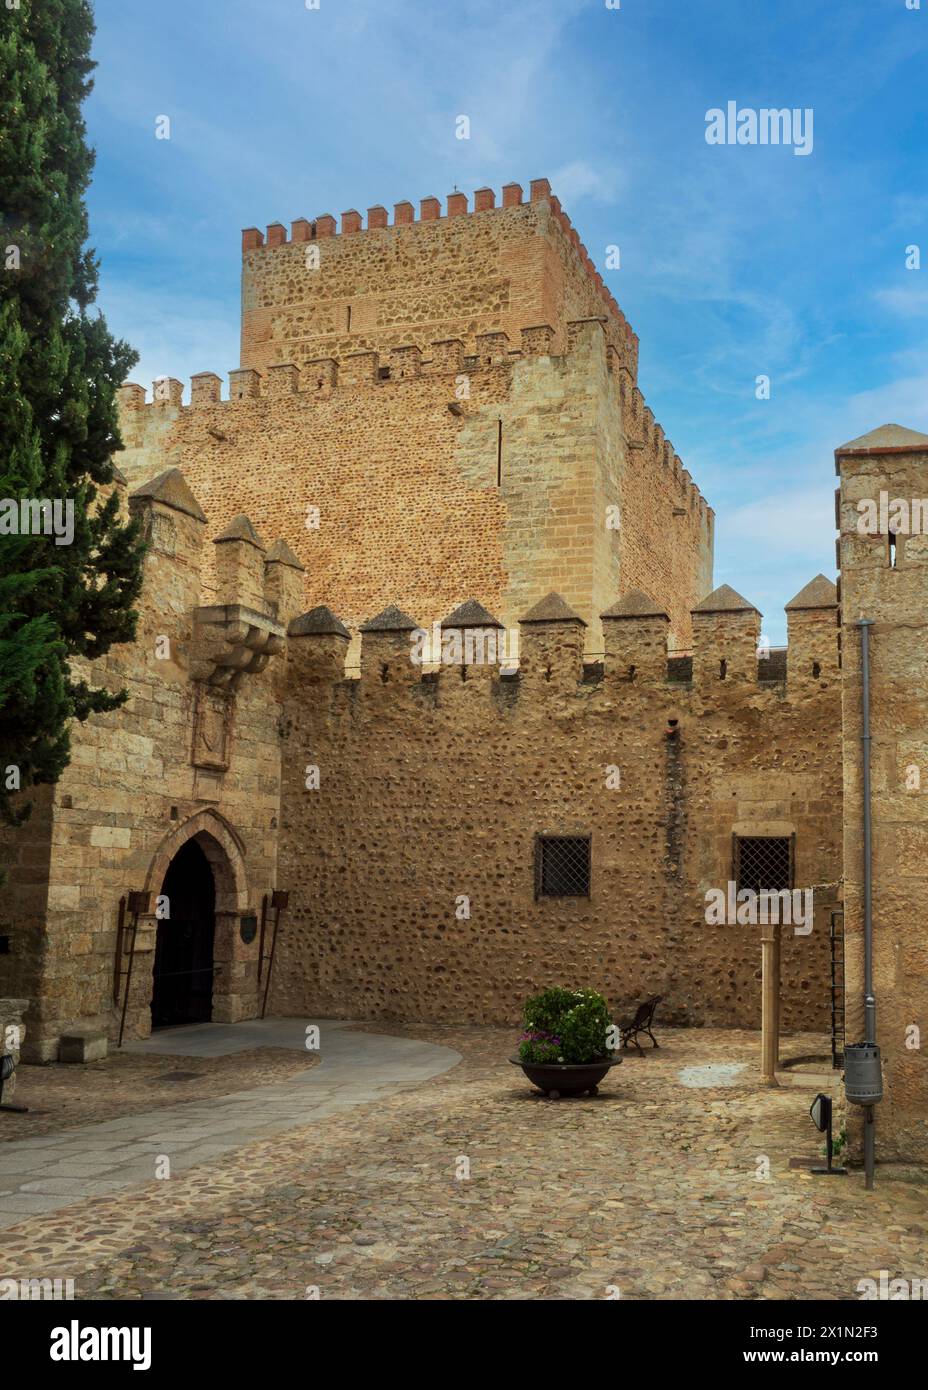 Tower of the castle of Ciudad Rodrigo, Salamanca Stock Photo